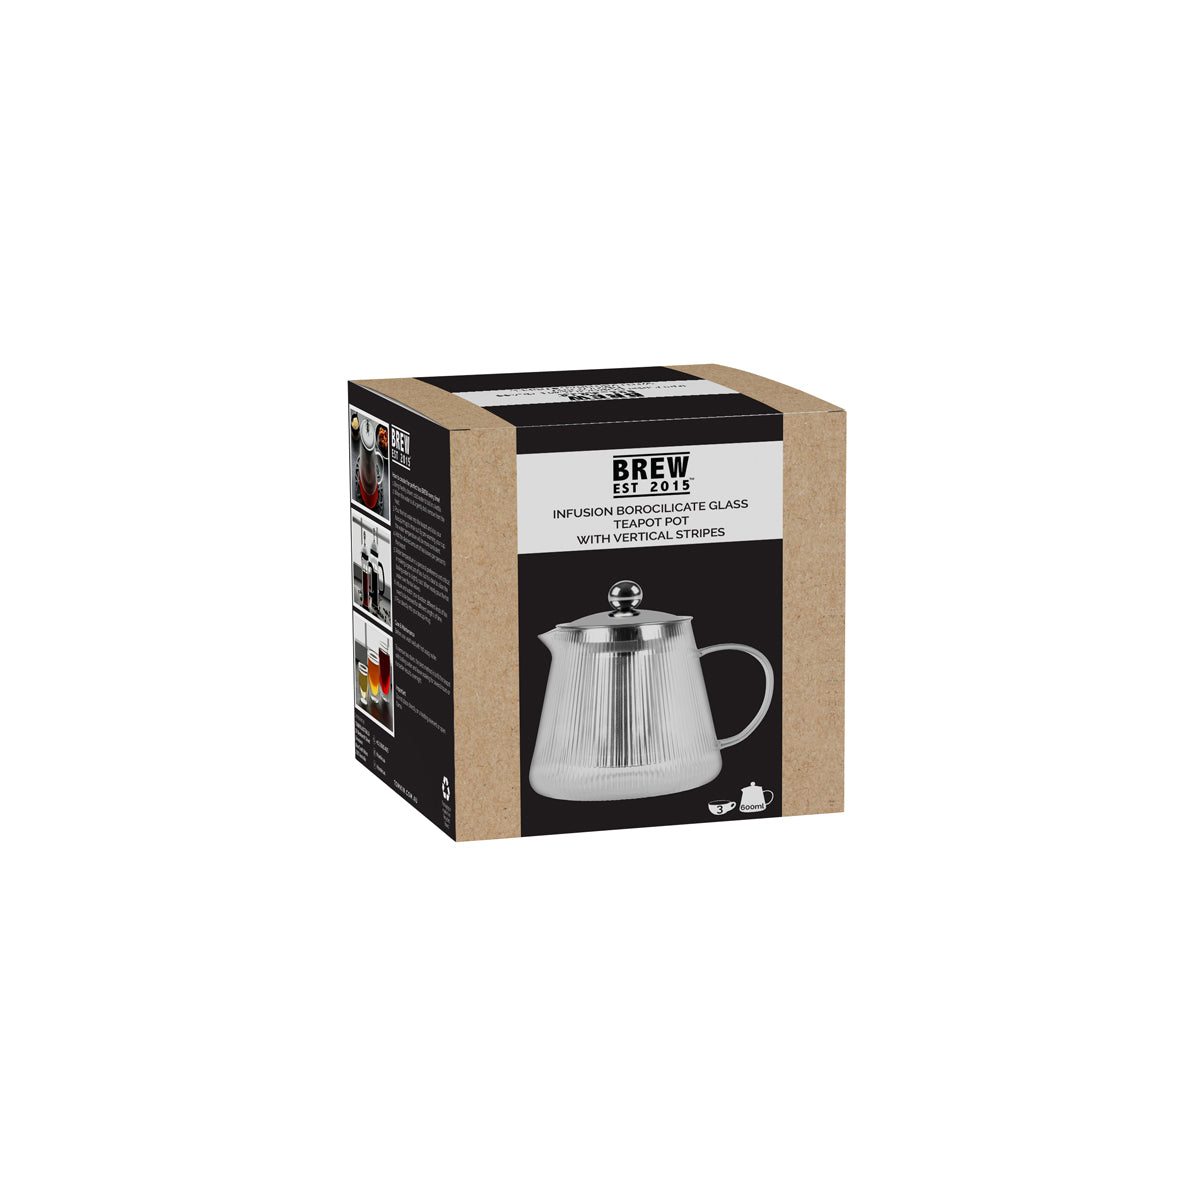 BW9120 Brew Infusion Teapot With Vertical Stripes 600ml Tomkin Australia Hospitality Supplies